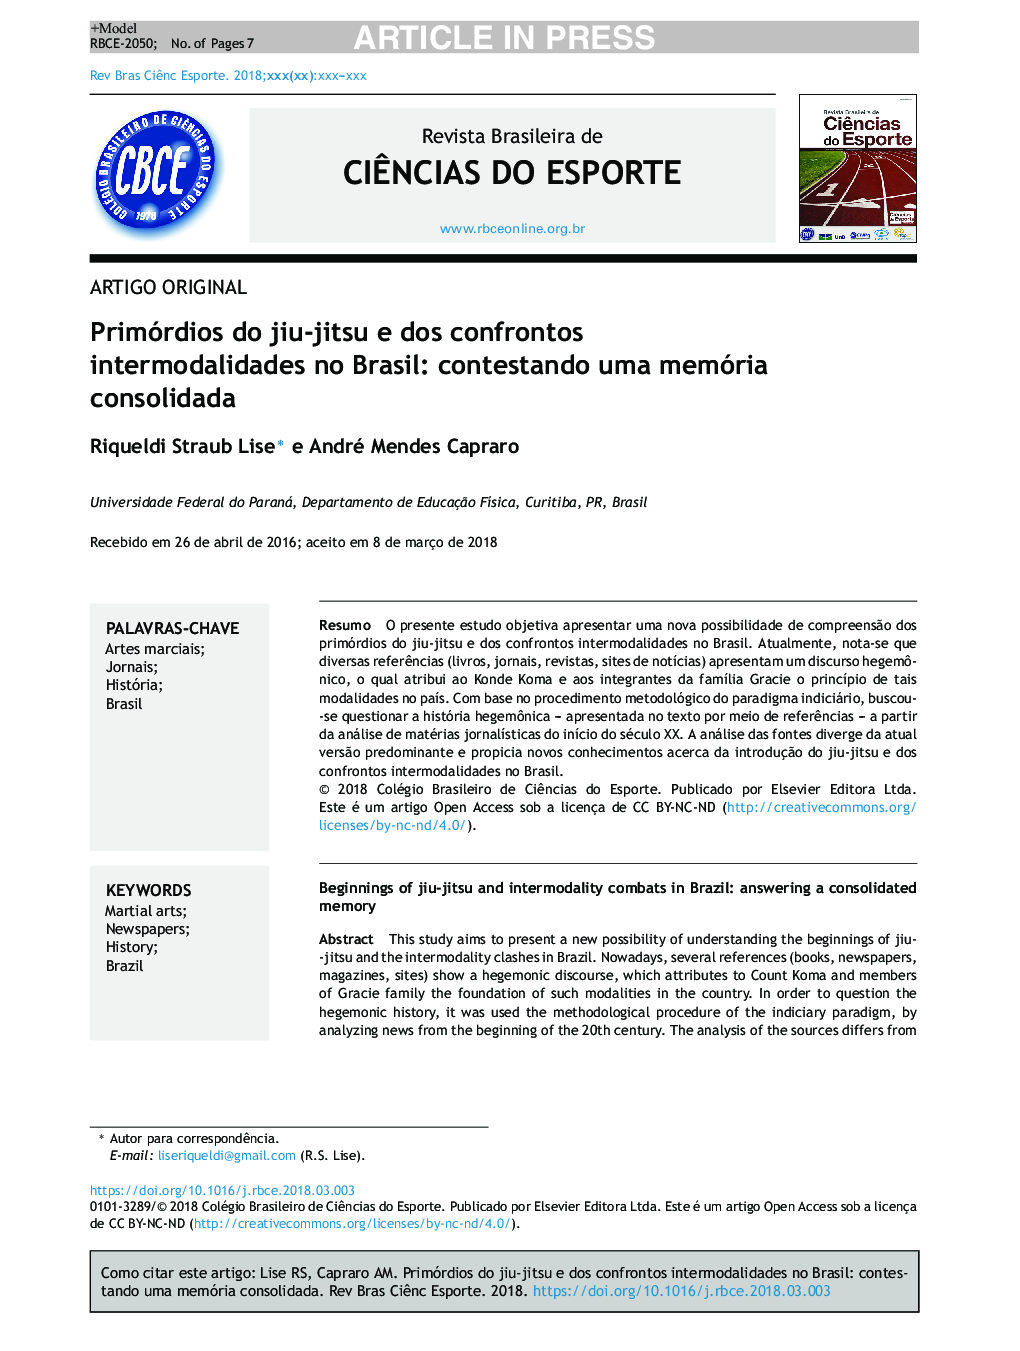 Primórdios do jiuâjitsu e dos confrontos intermodalidades no Brasil: contestando uma memória consolidada